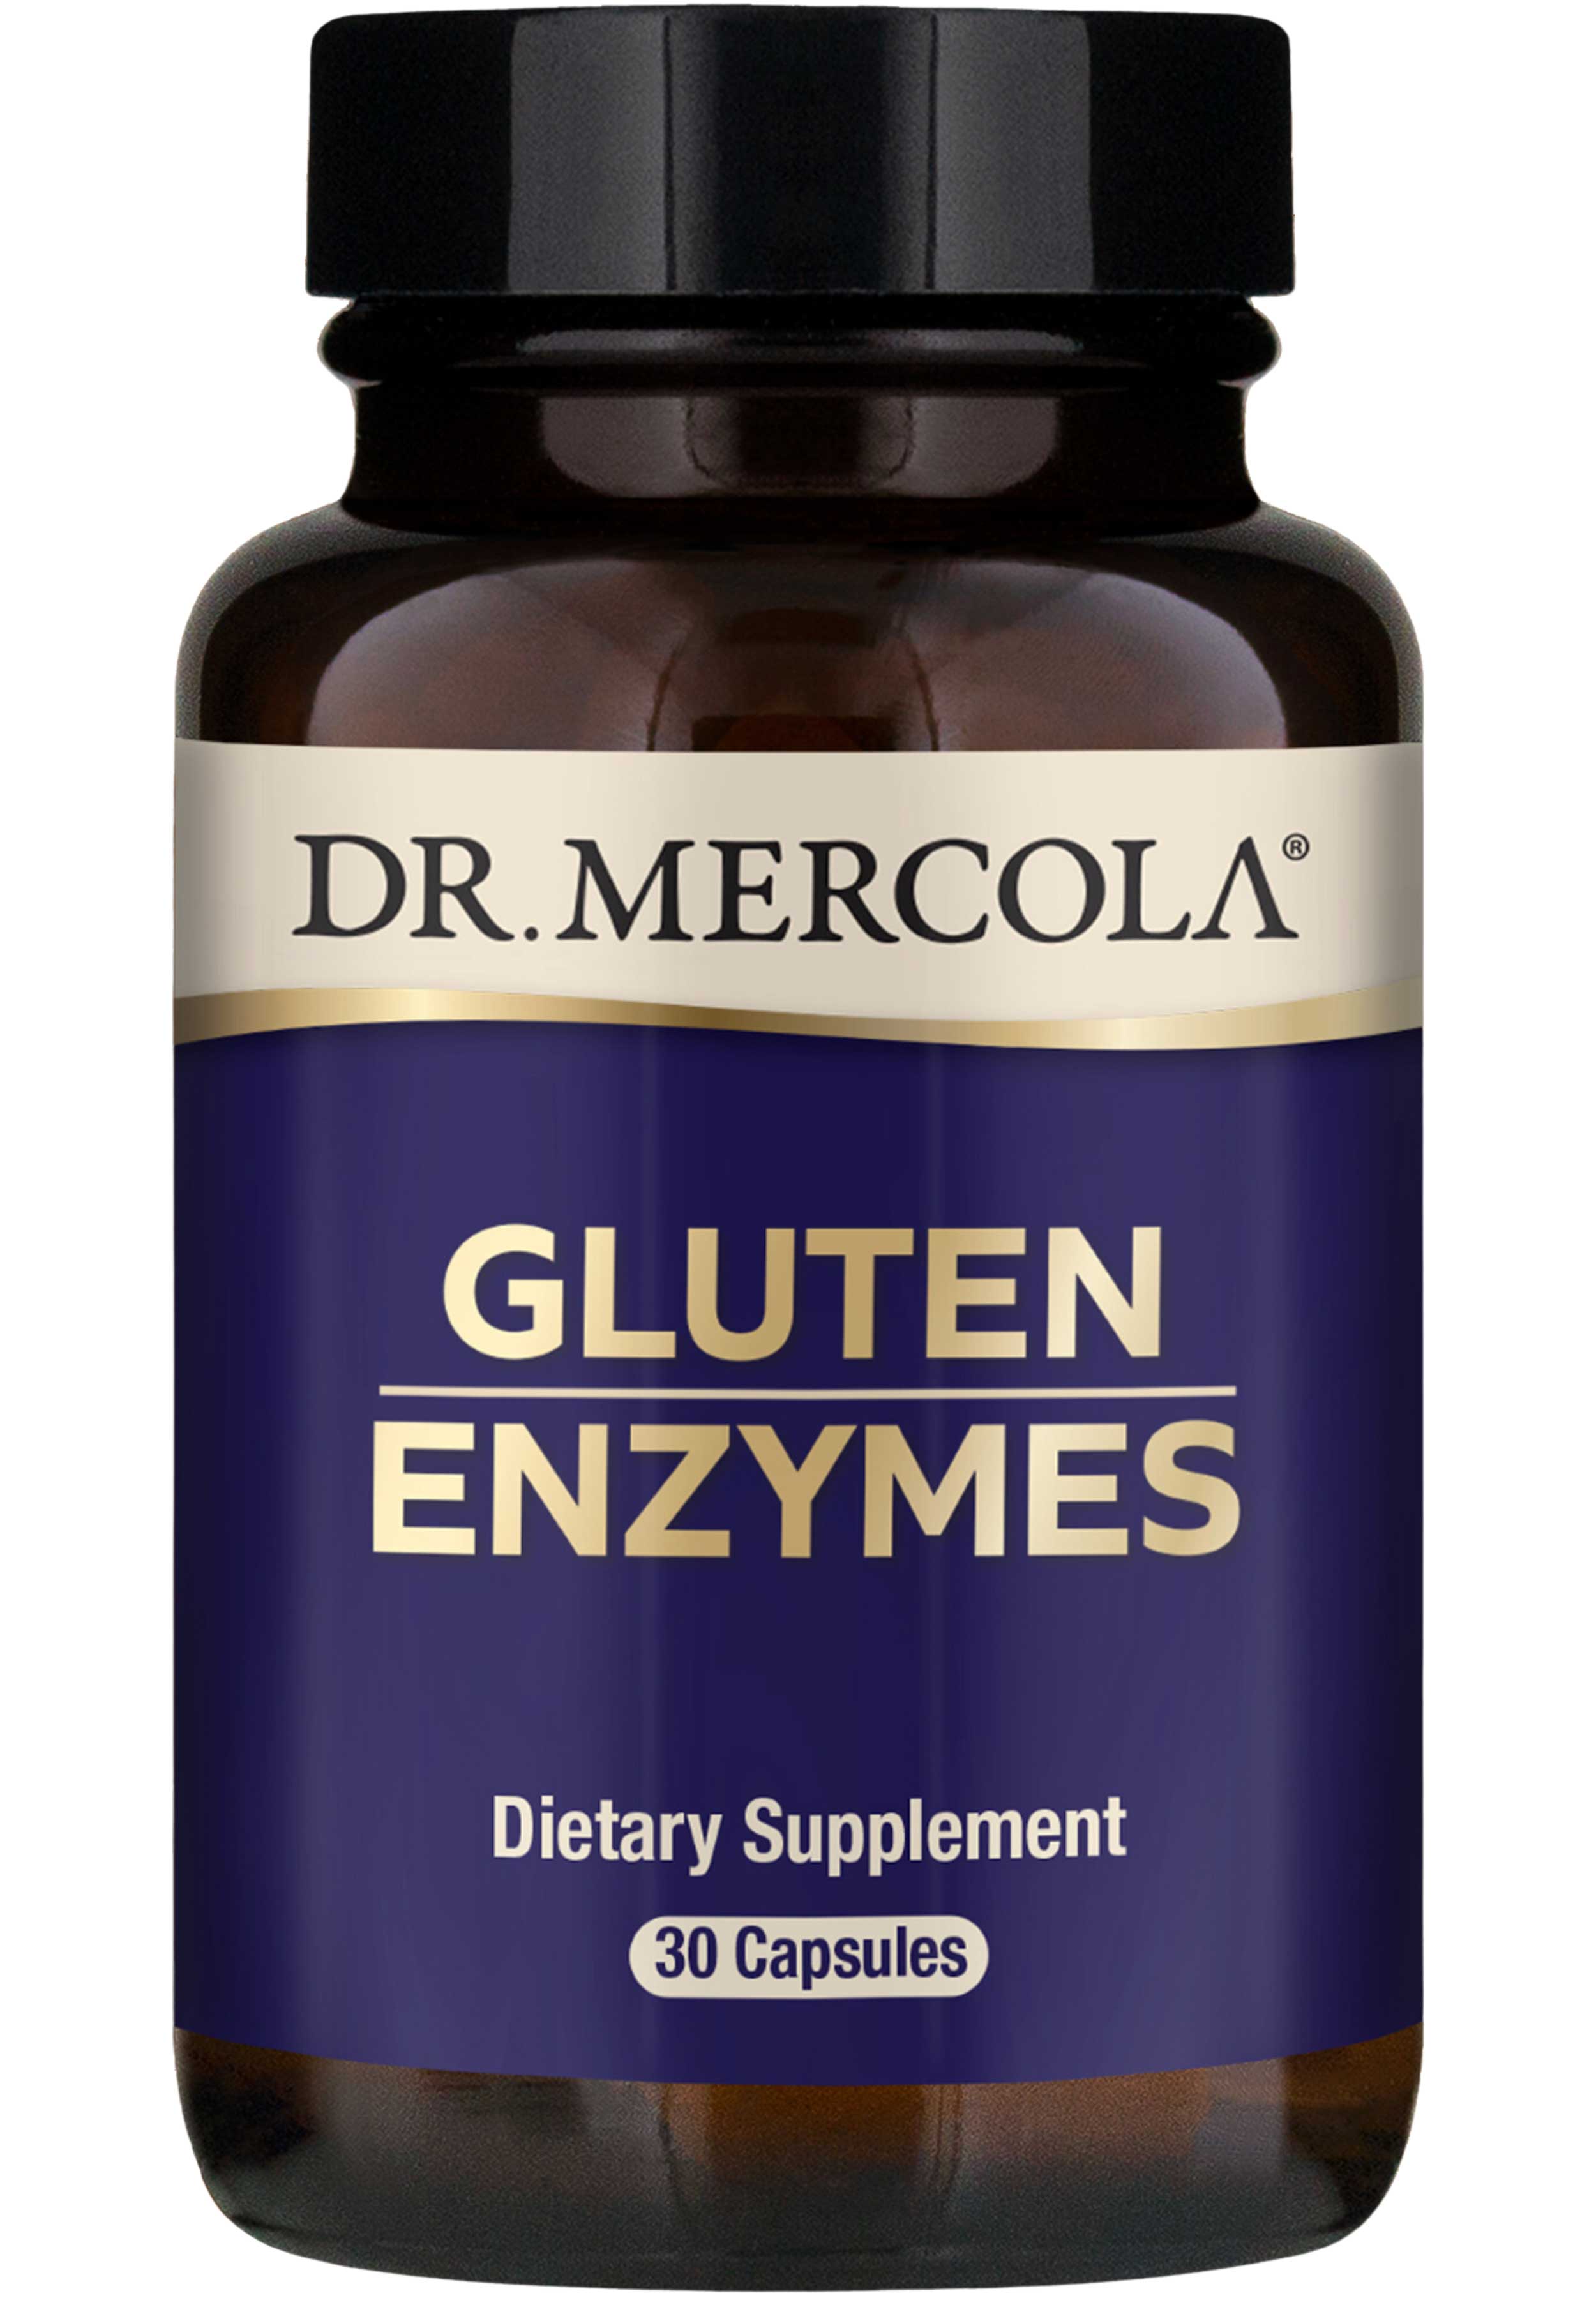 Dr. Mercola Gluten Enzymes